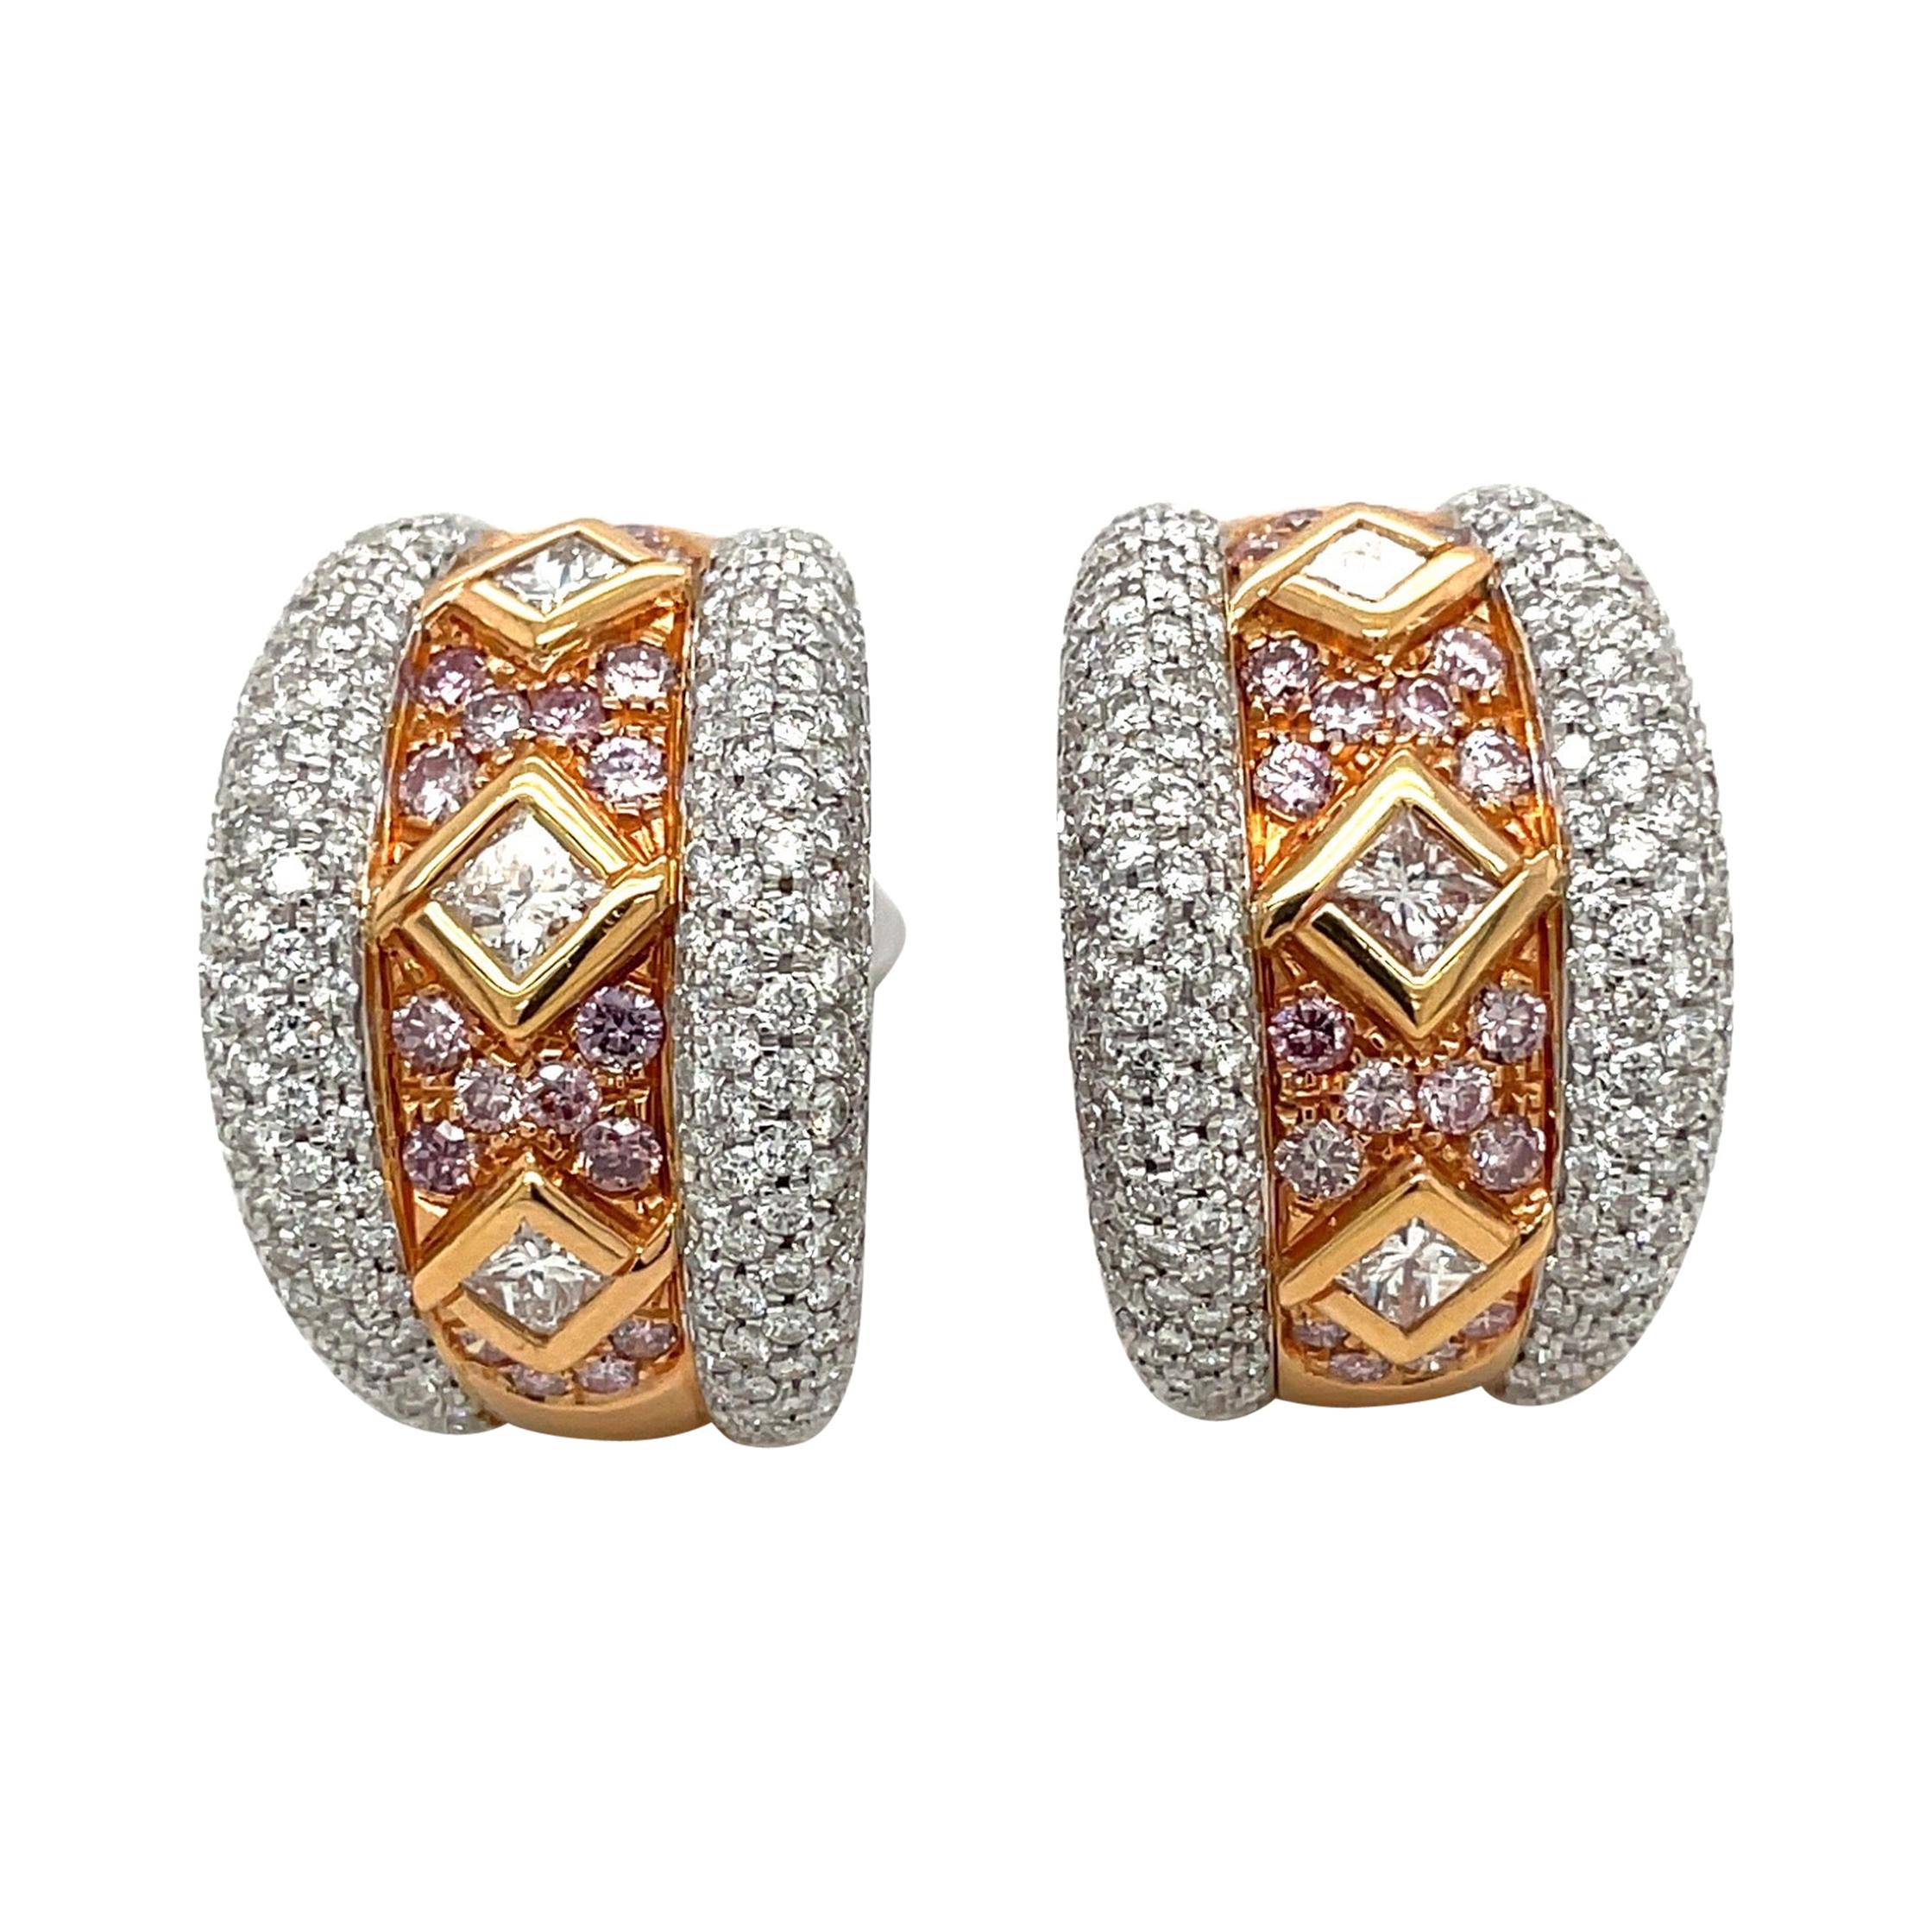 Cellini Princess Cut Diamond Hoop Earrings with Pink Diamonds in 18kt Gold